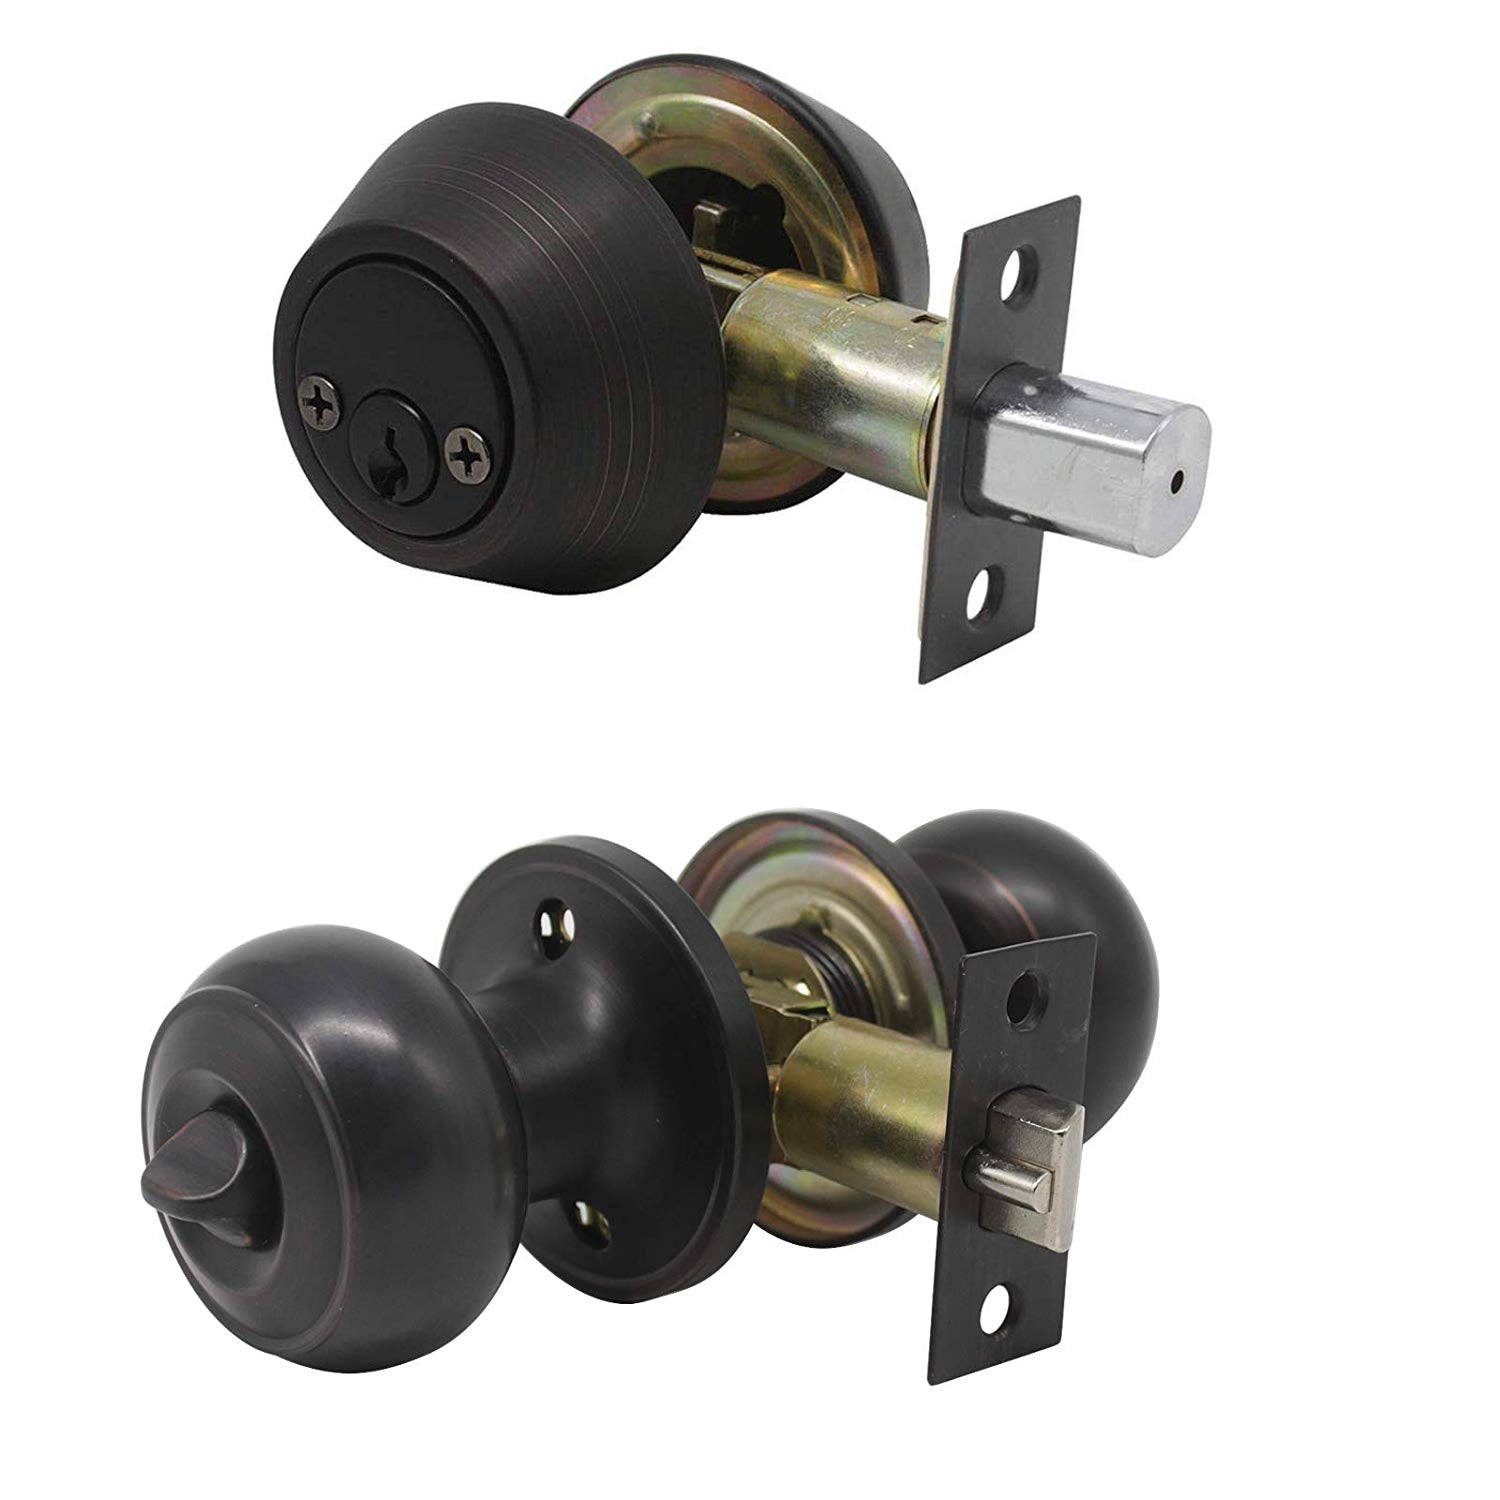 Flat Ball Door Knob Lock with Double Cylinder Deadbolt Keyed Entry Door Lockset Keyed Alike, Oil Rubbed Bronze Finish - DL609ET-102ORB